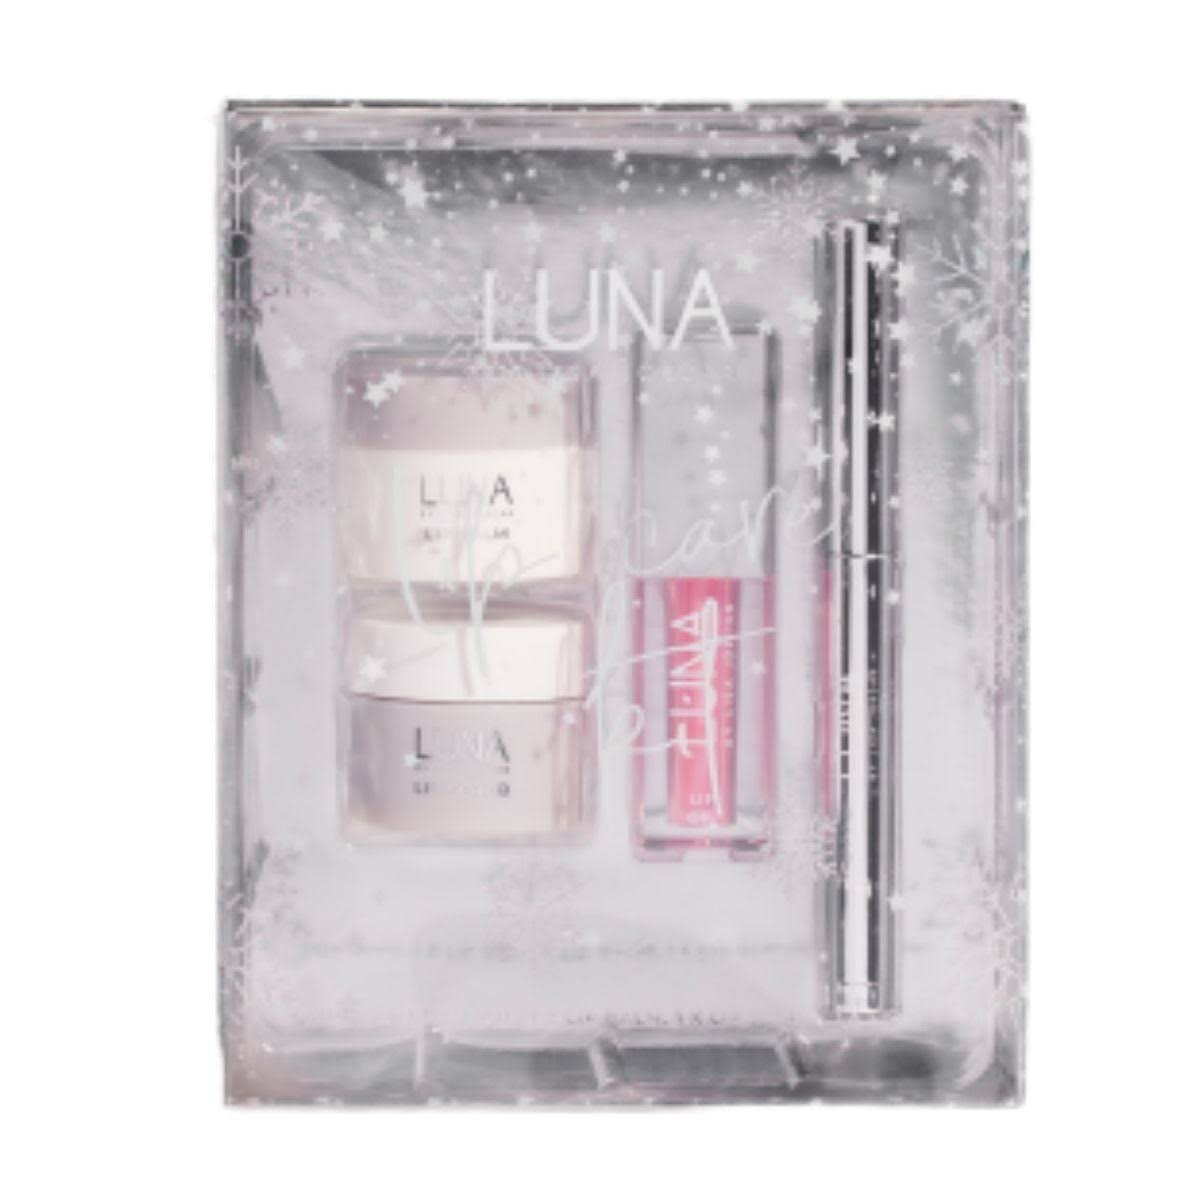 Luna By Lisa Lip Care Kit